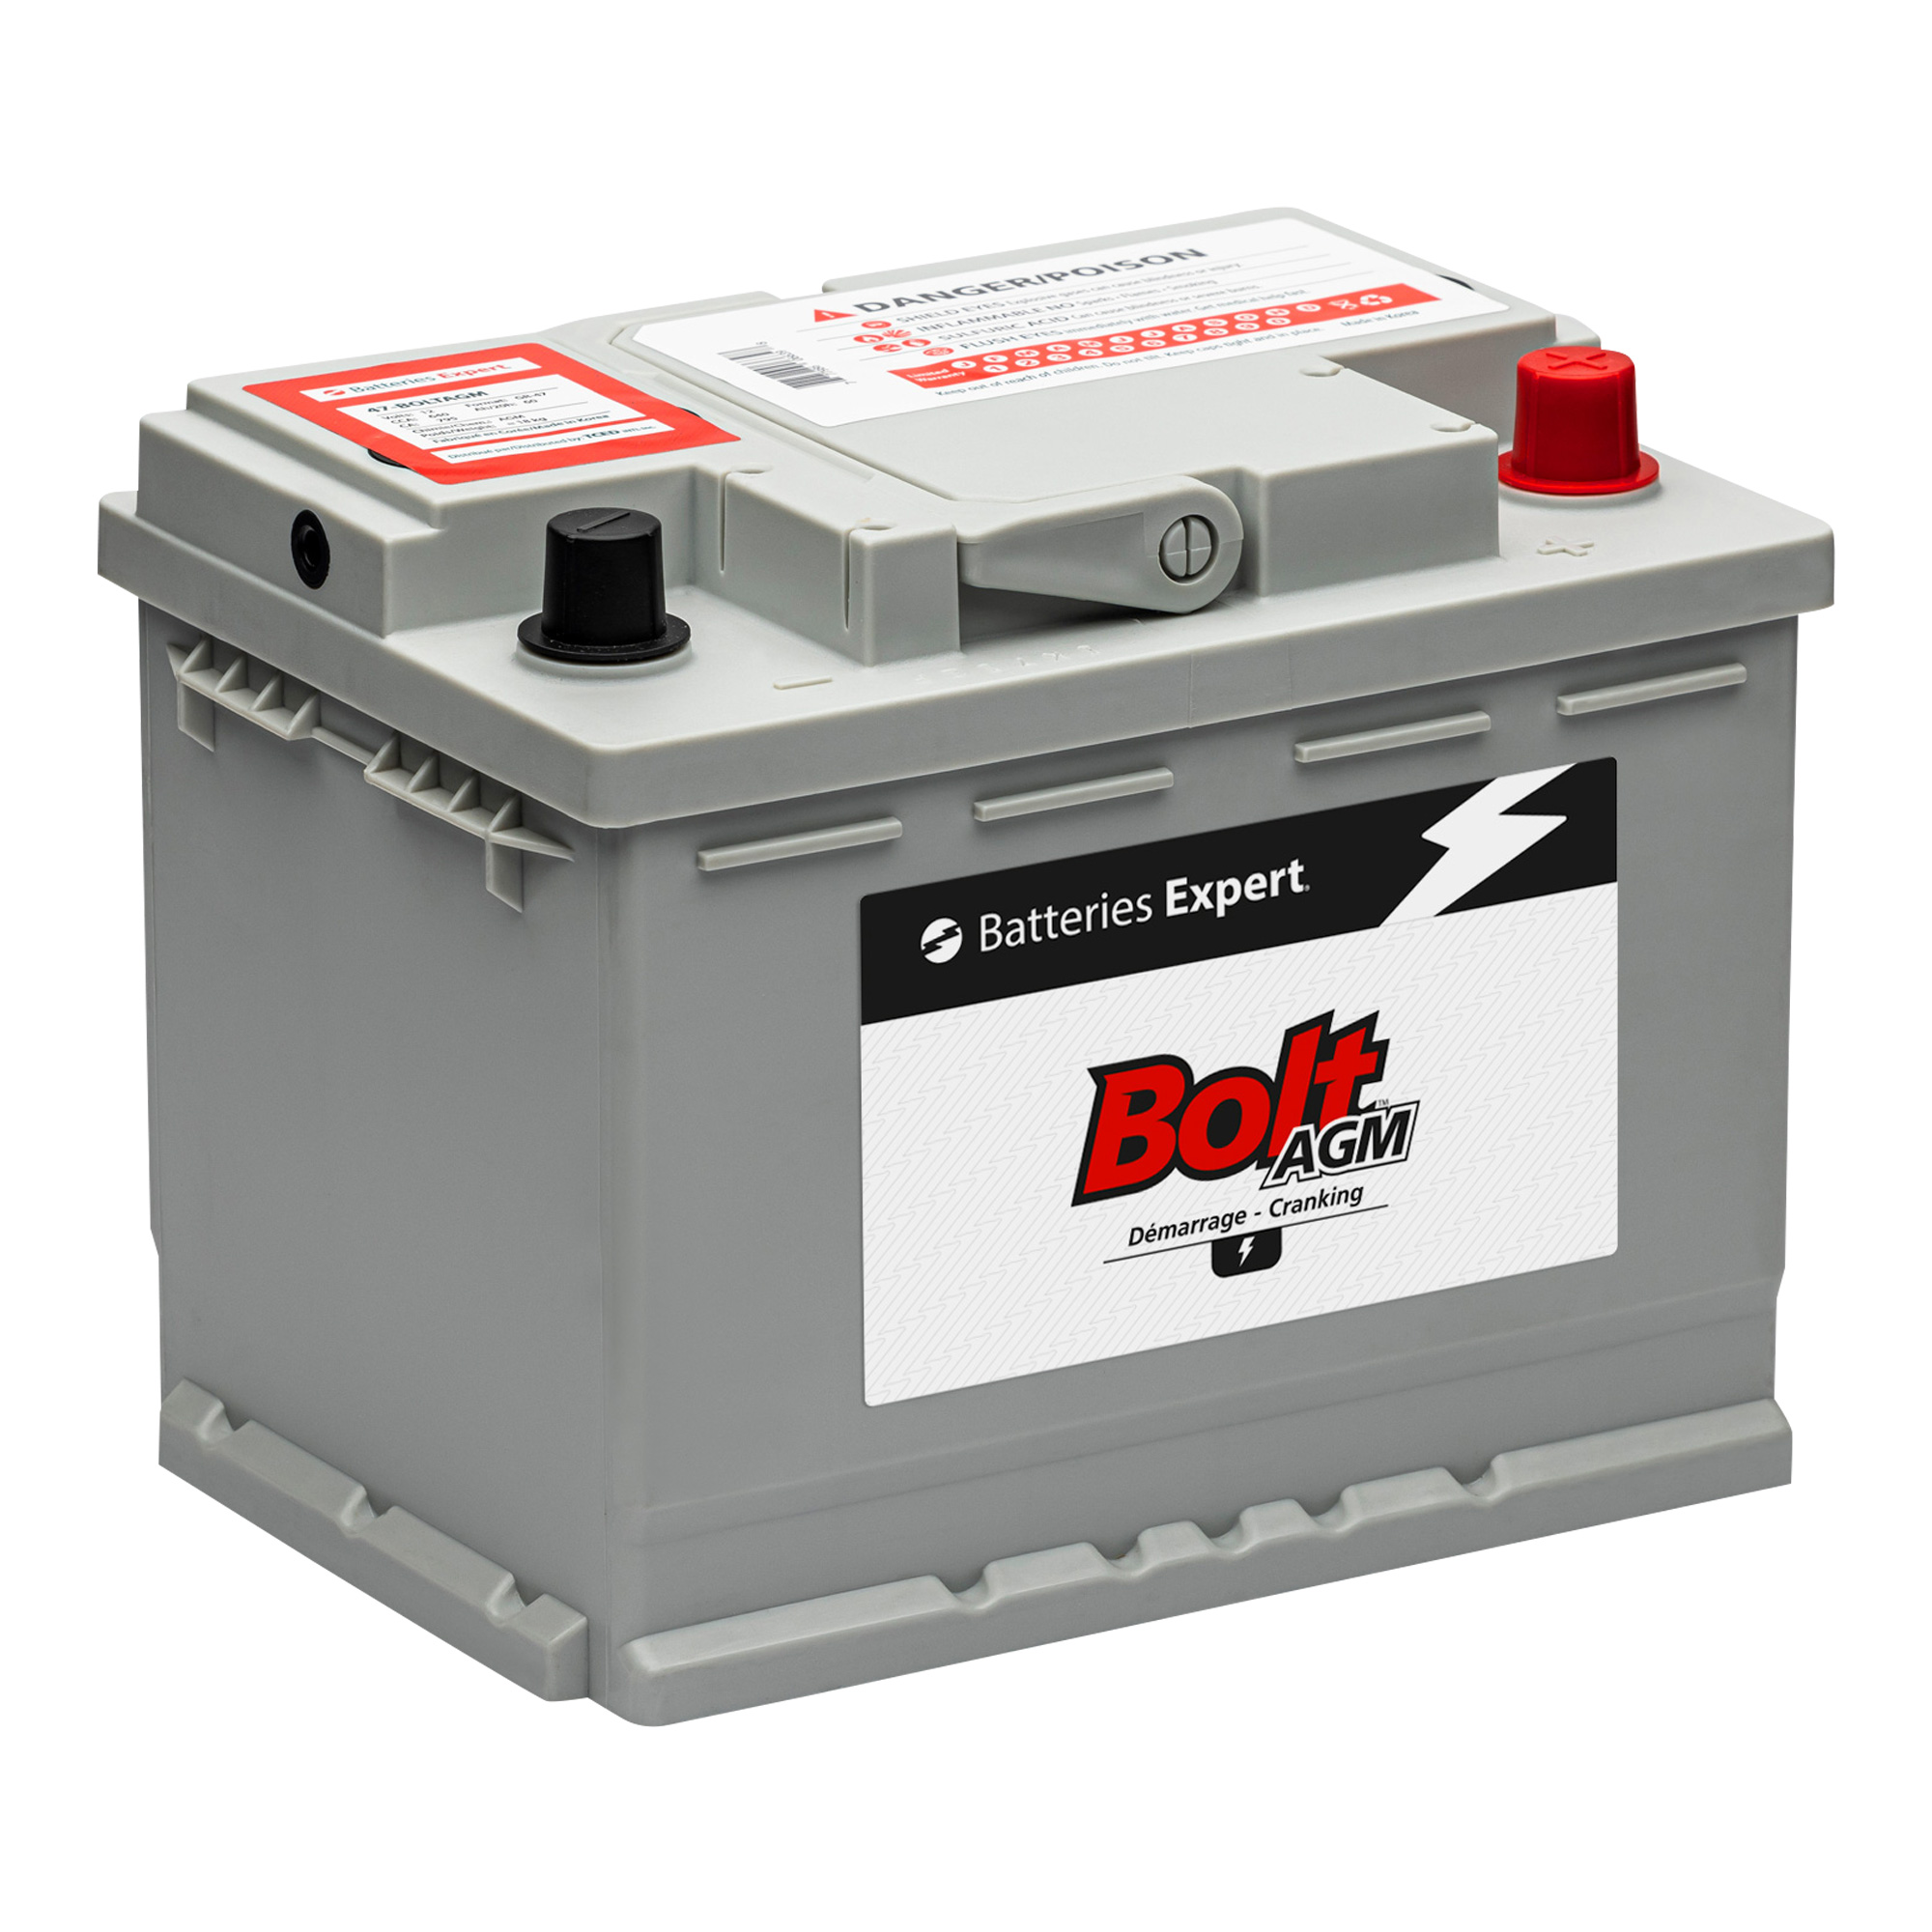 47-BOLTAGM Cranking Battery (AGM) Group 47/L2 12V Batteries Expert